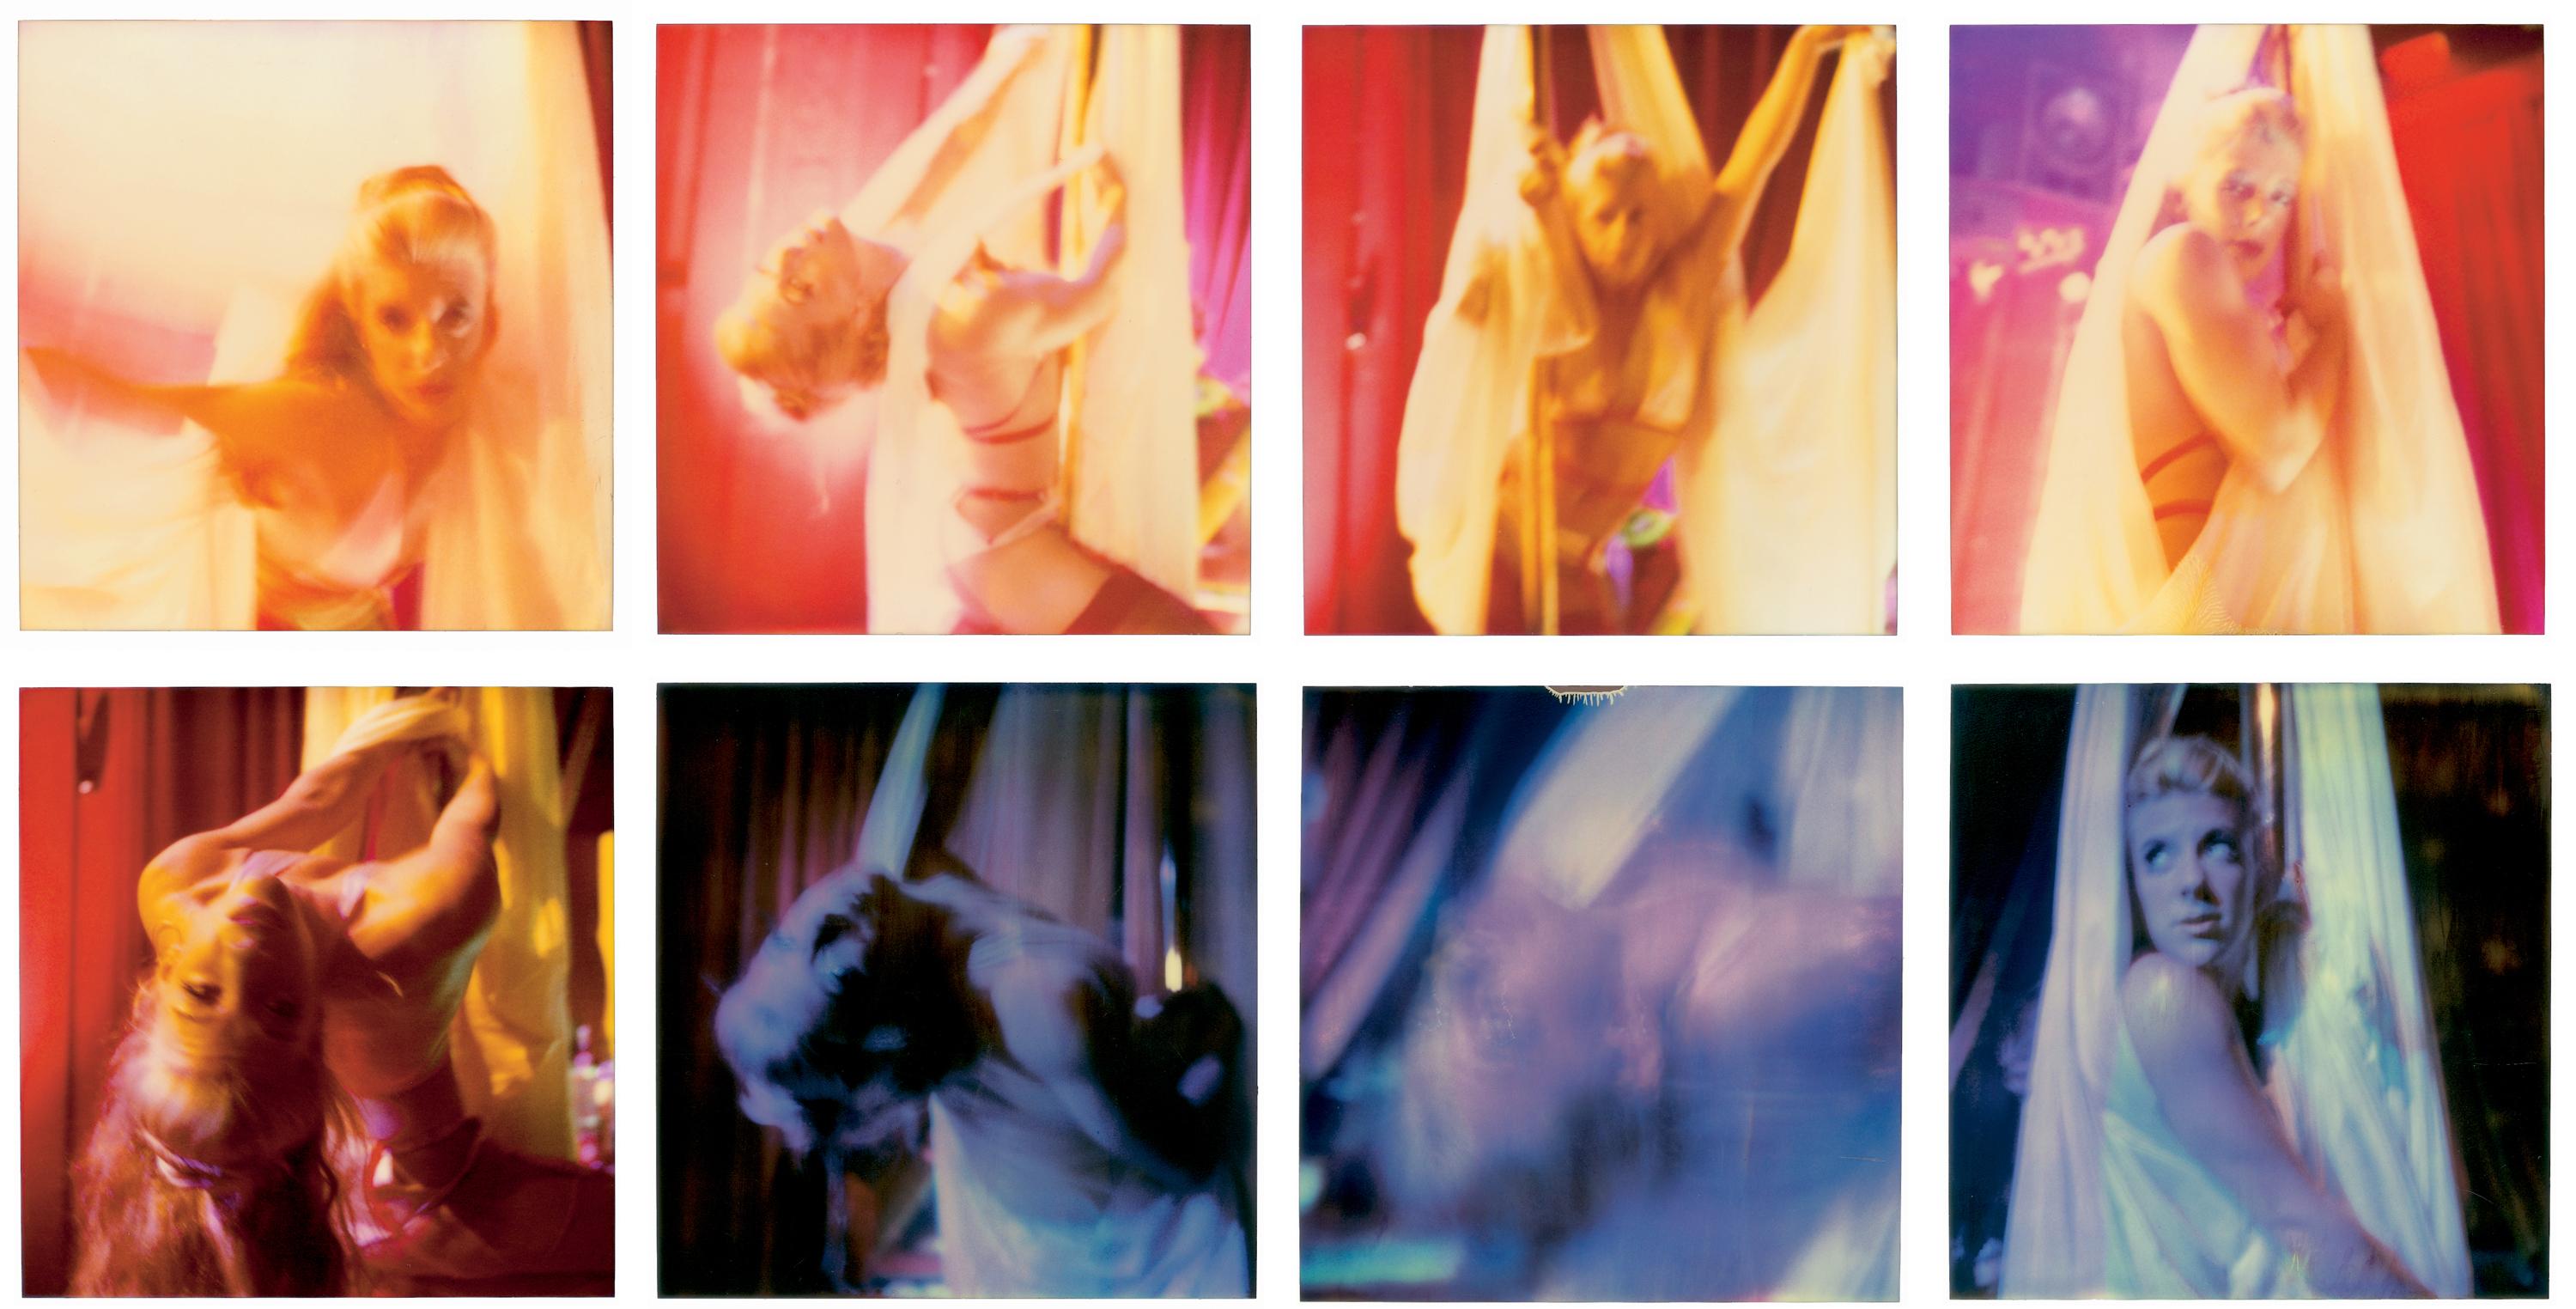 Stefanie Schneider Figurative Photograph - Dancer (Stay) - 8 pieces, smaller size, analog, Polaroid, Contemporary, 